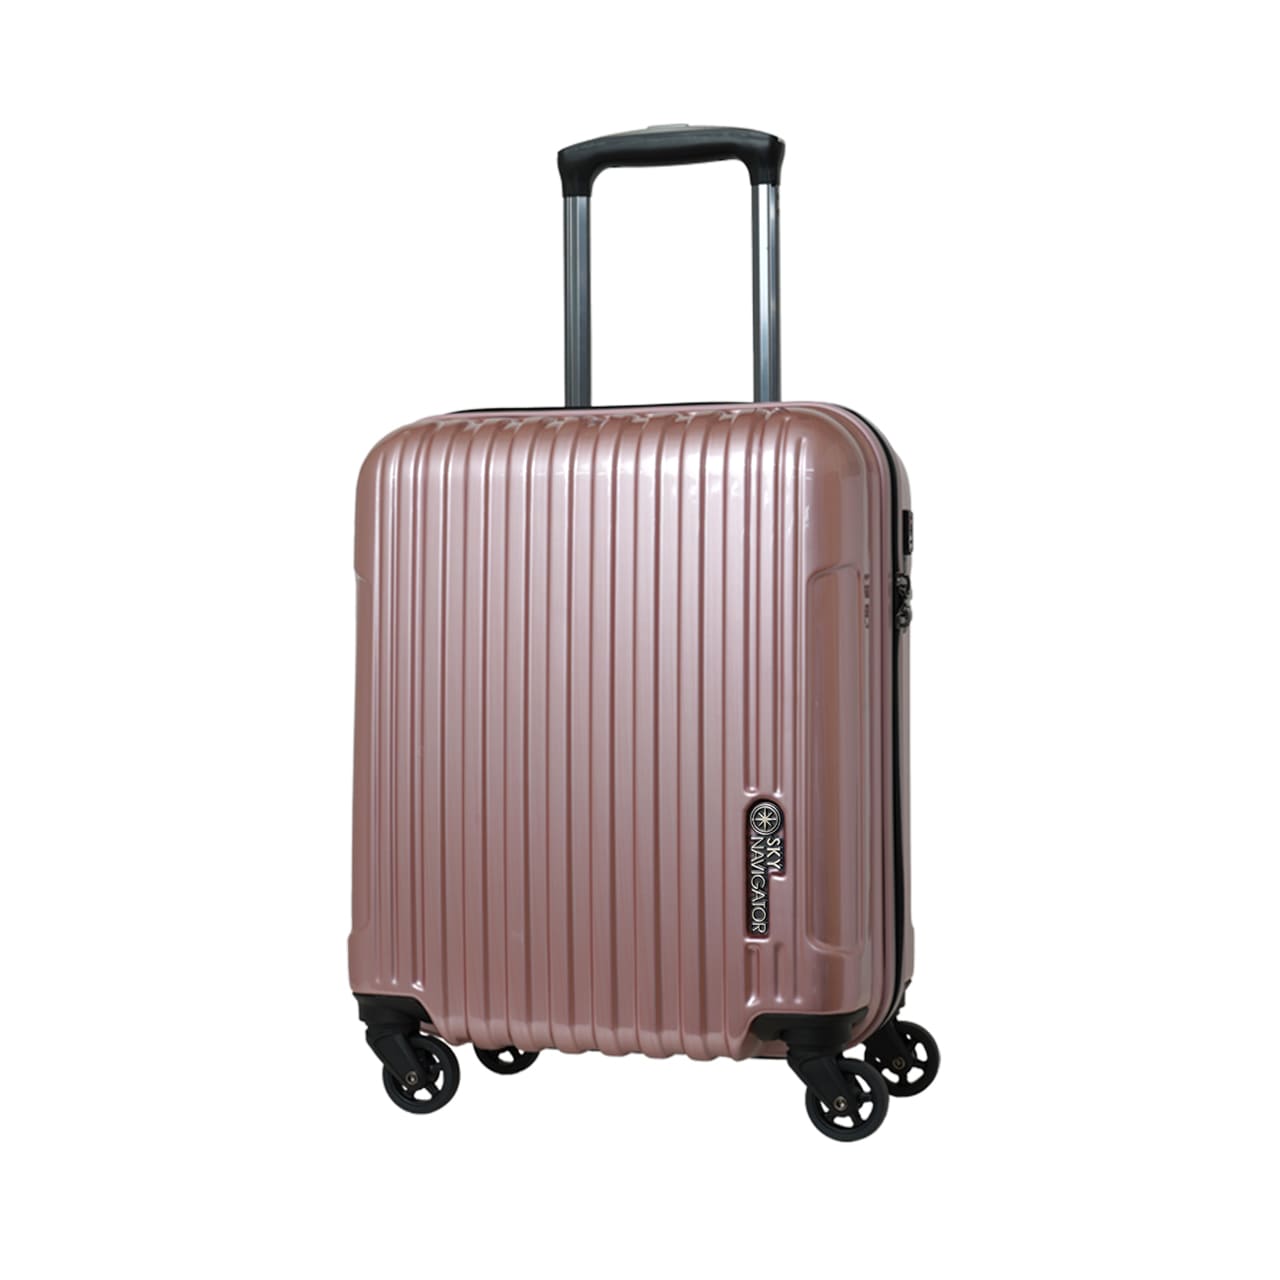 SKYNAVIGATORのスーツケースSK-0722-41のピンクヘアラインの正面振り画像